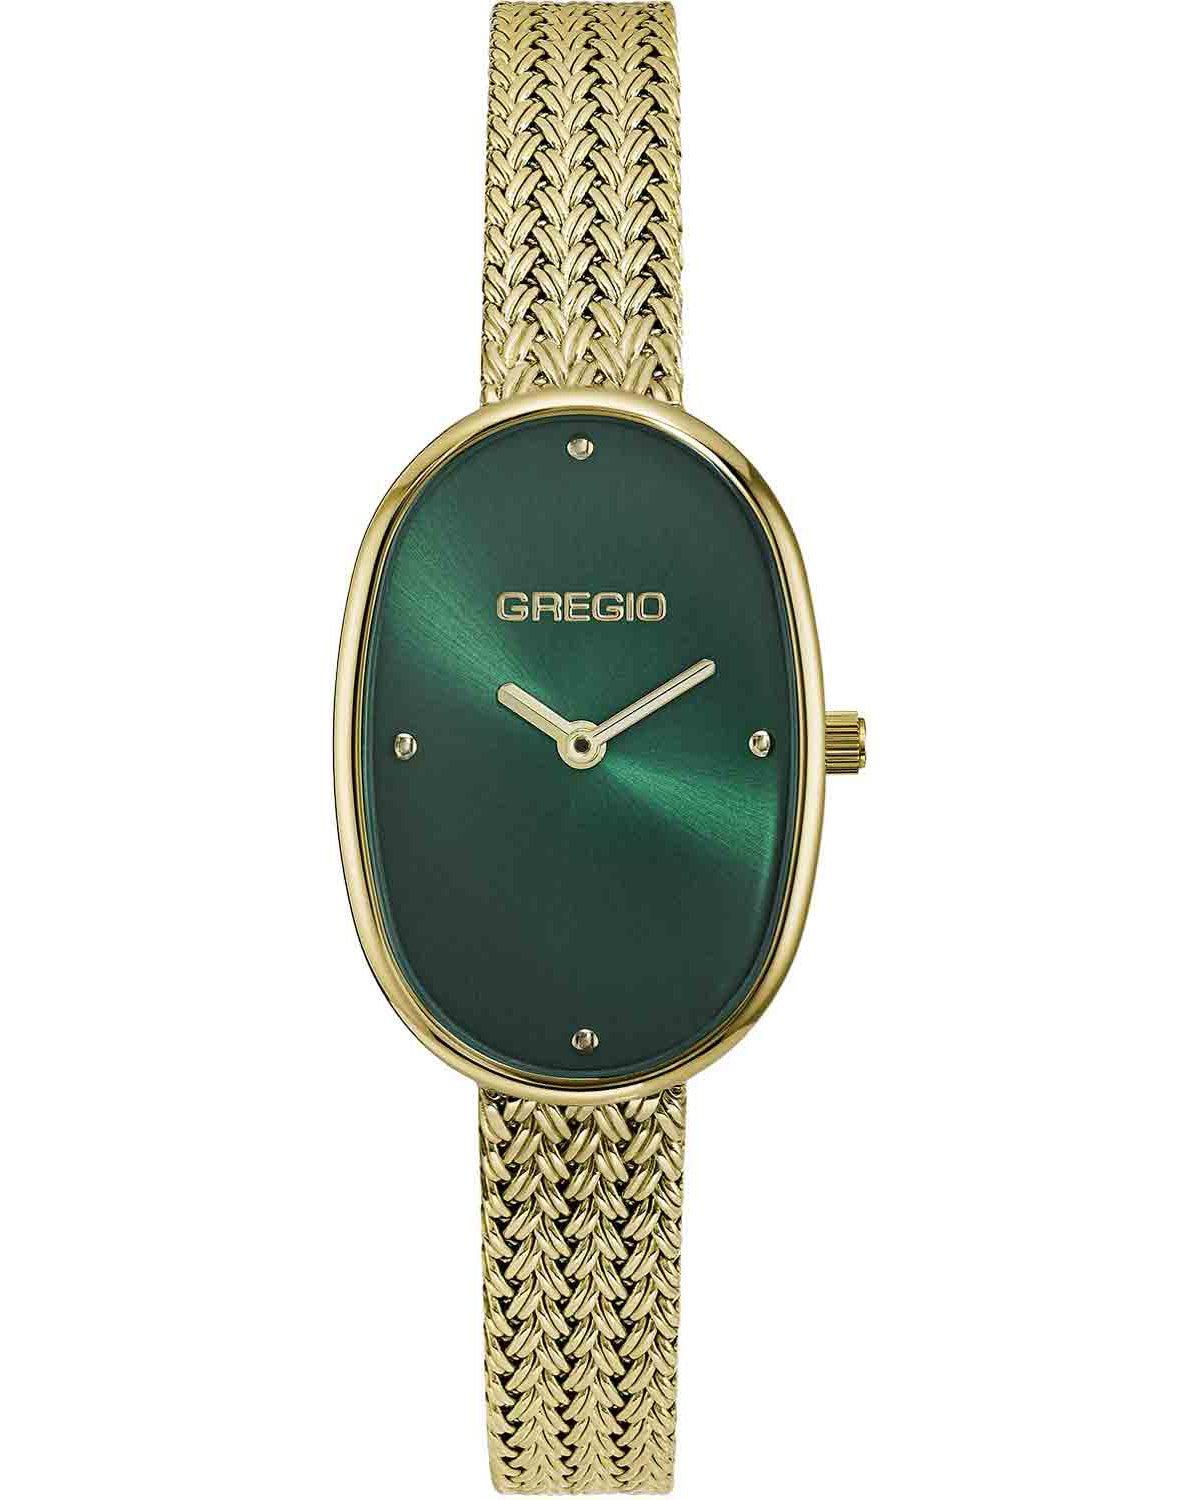 GREGIO Aveline - GR380021, Gold case with Stainless Steel Bracelet